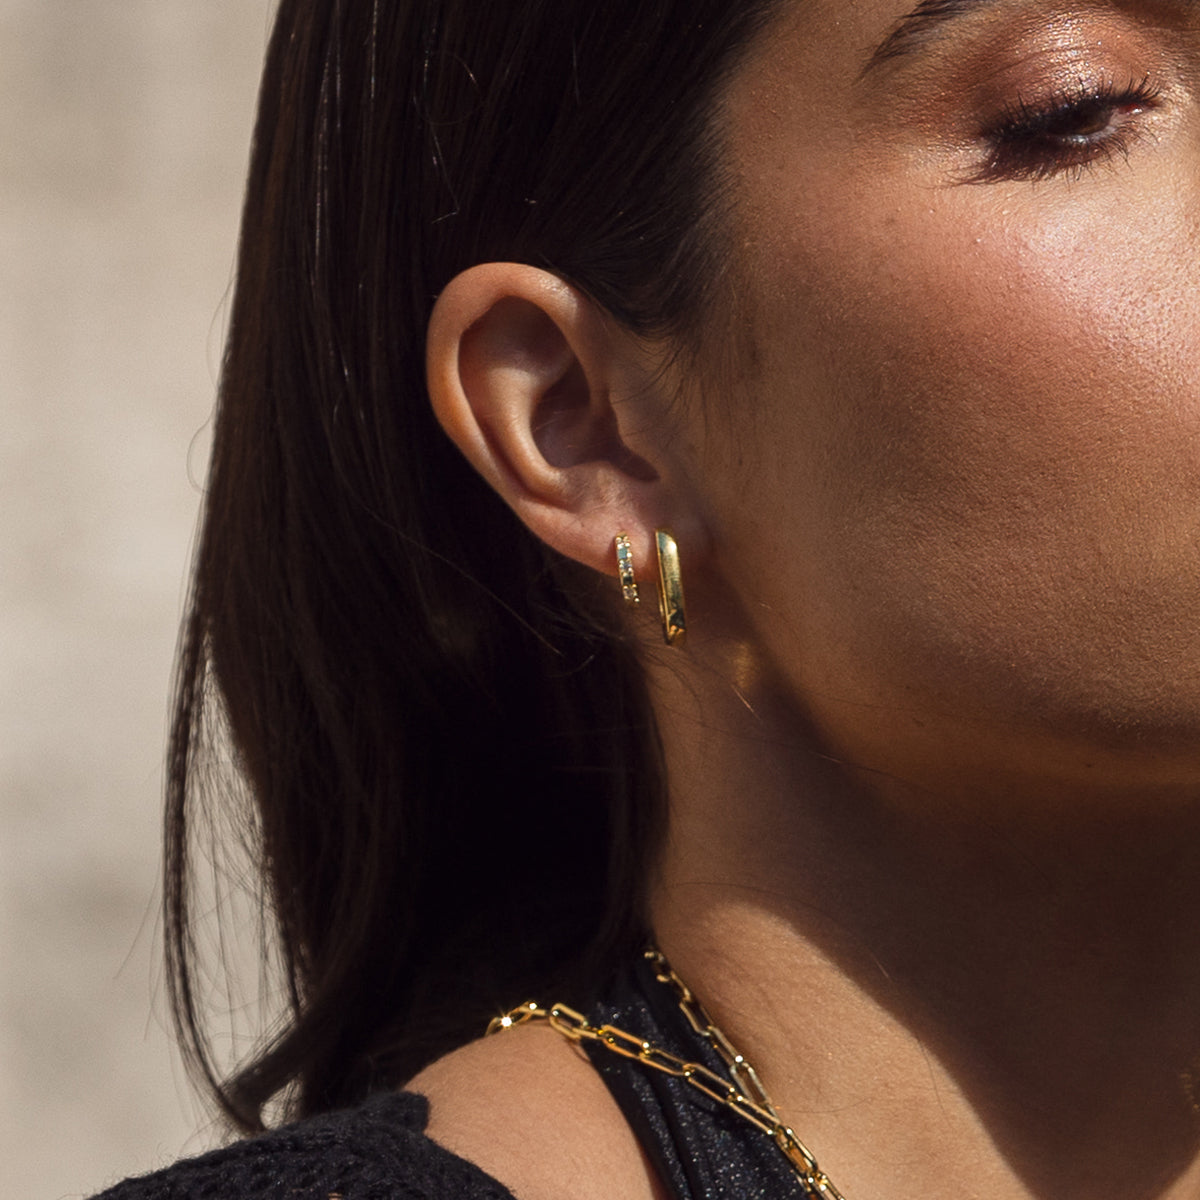 18 Creative Ways to Wear Earrings Without Piercings - Lizzie in Lace